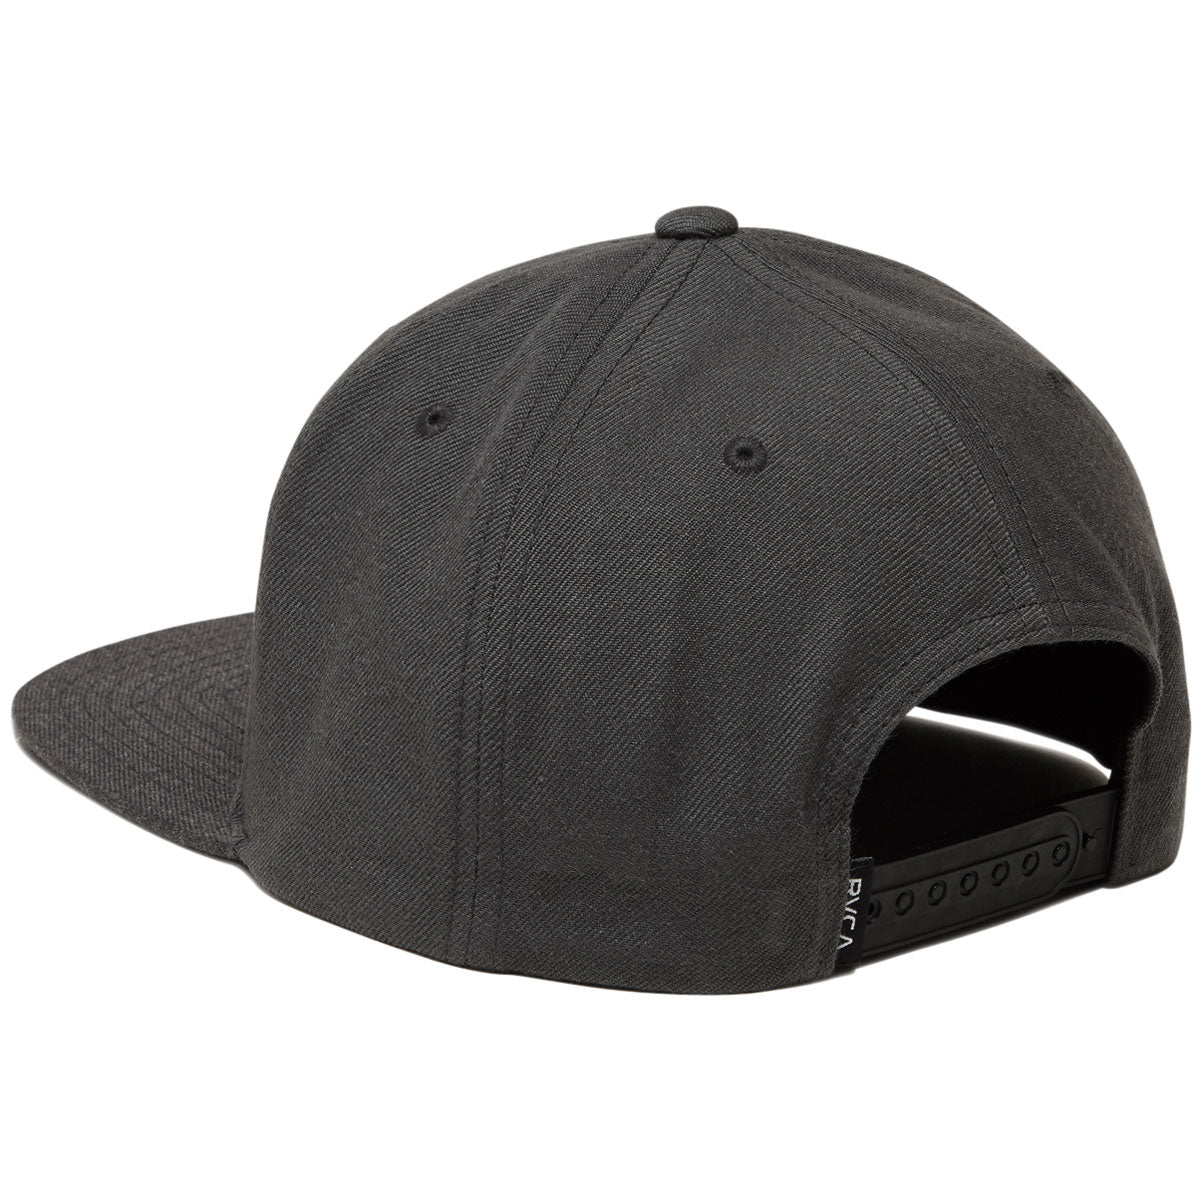 RVCA Va Patch Snapback Hat - Dark Grey image 2